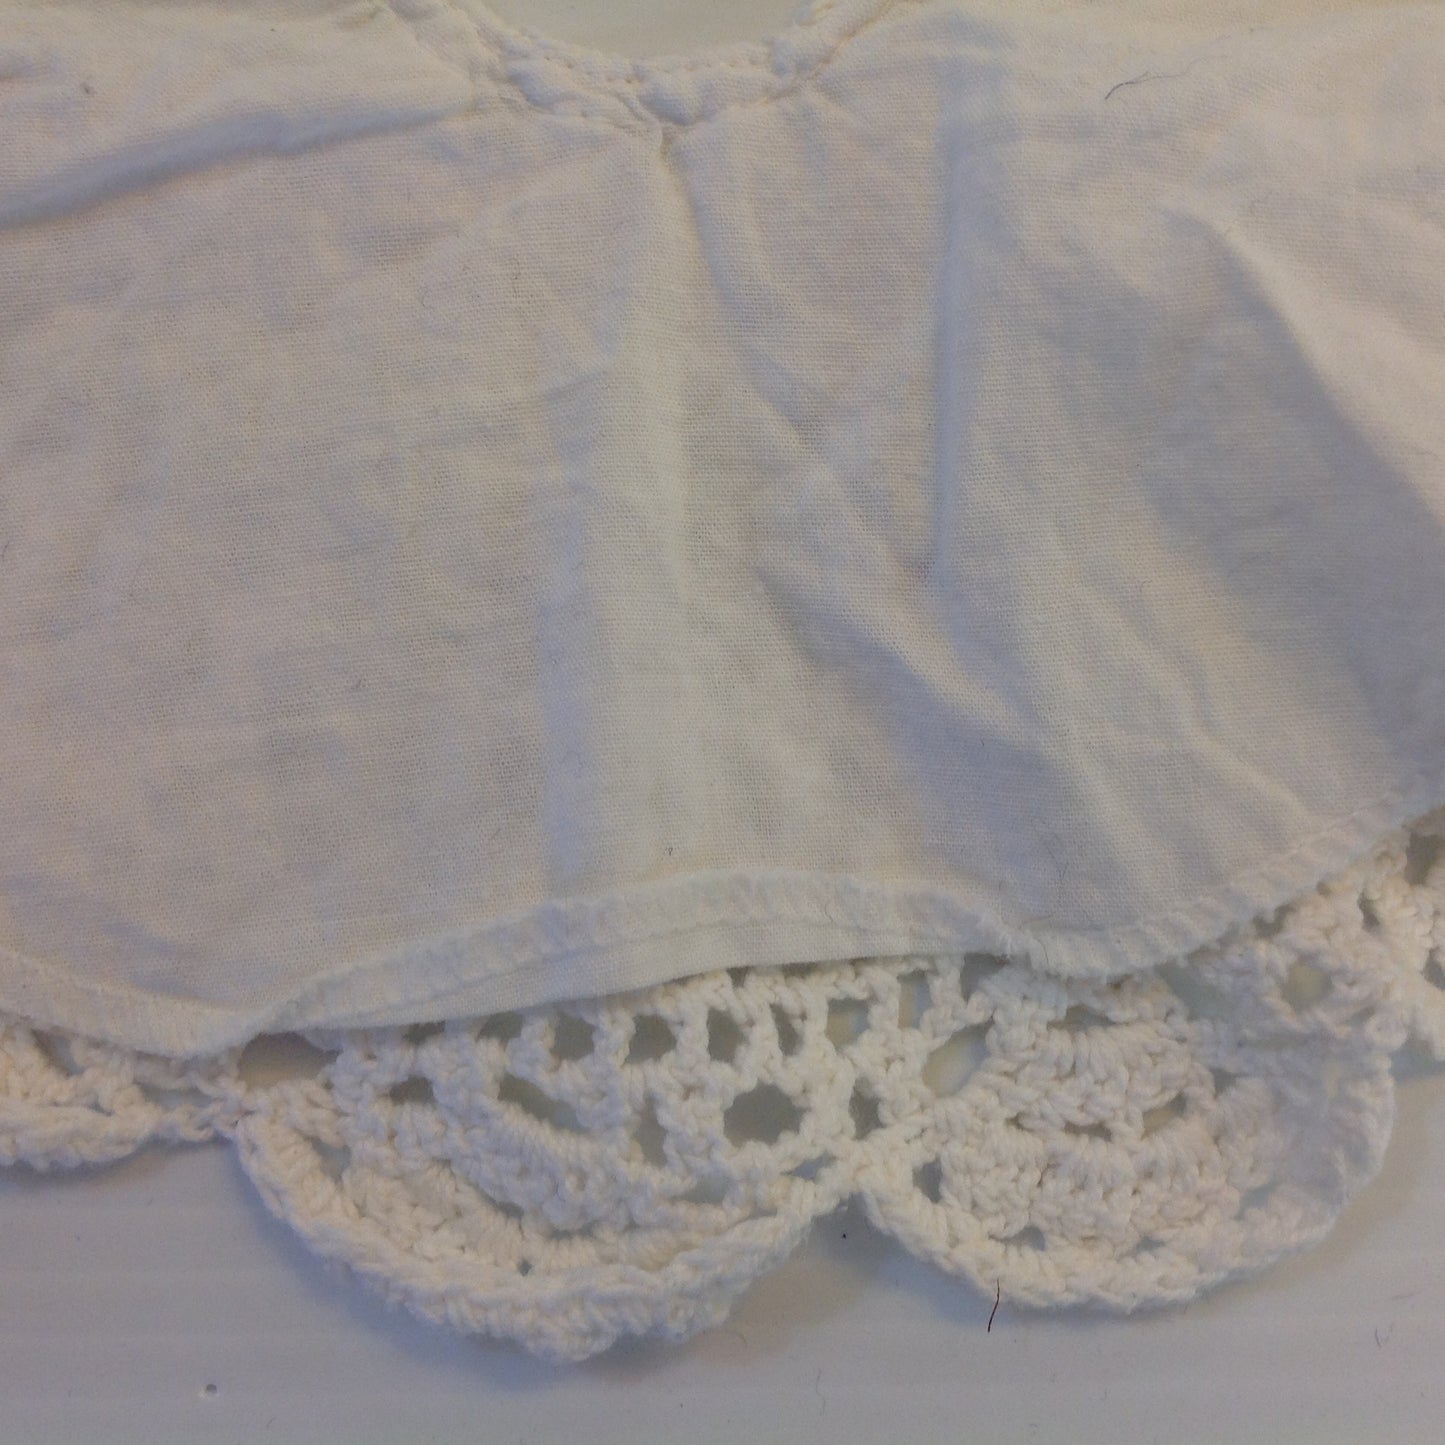 Vintage White Cotton Knit Lace Baby Collar Bib RBG